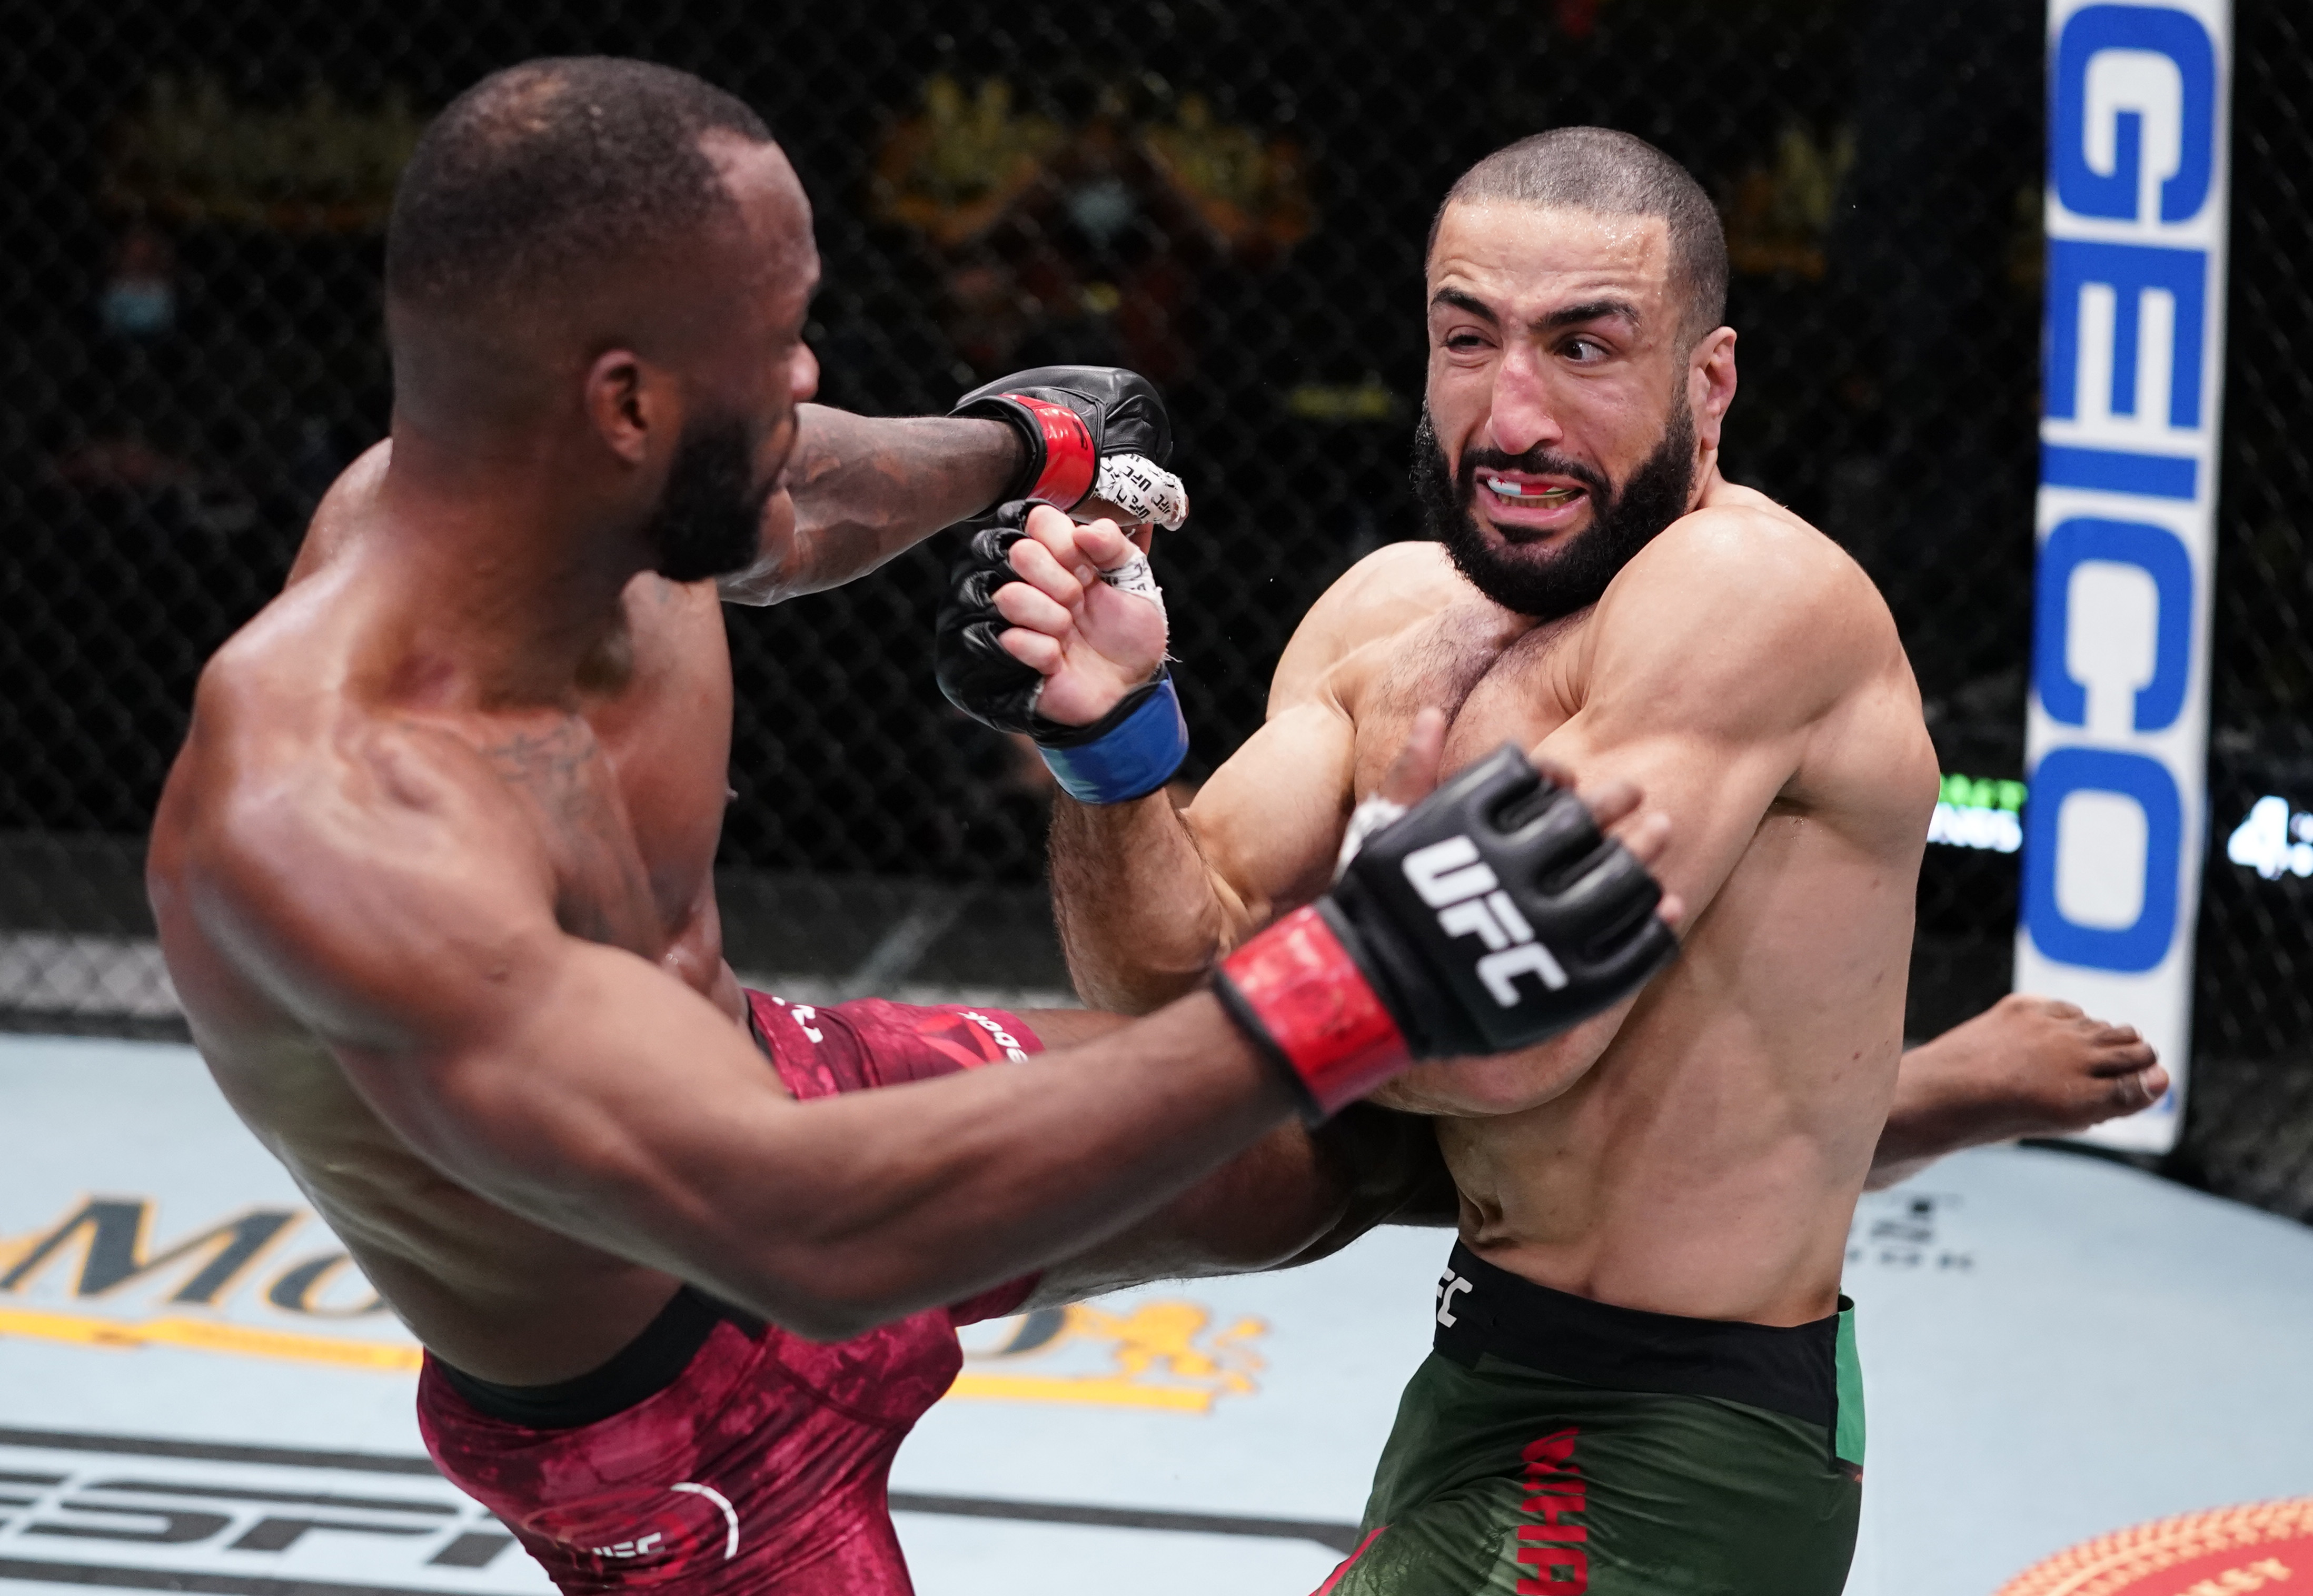 Leon Edwards kicks Belal Muhammad in a welterweight fight